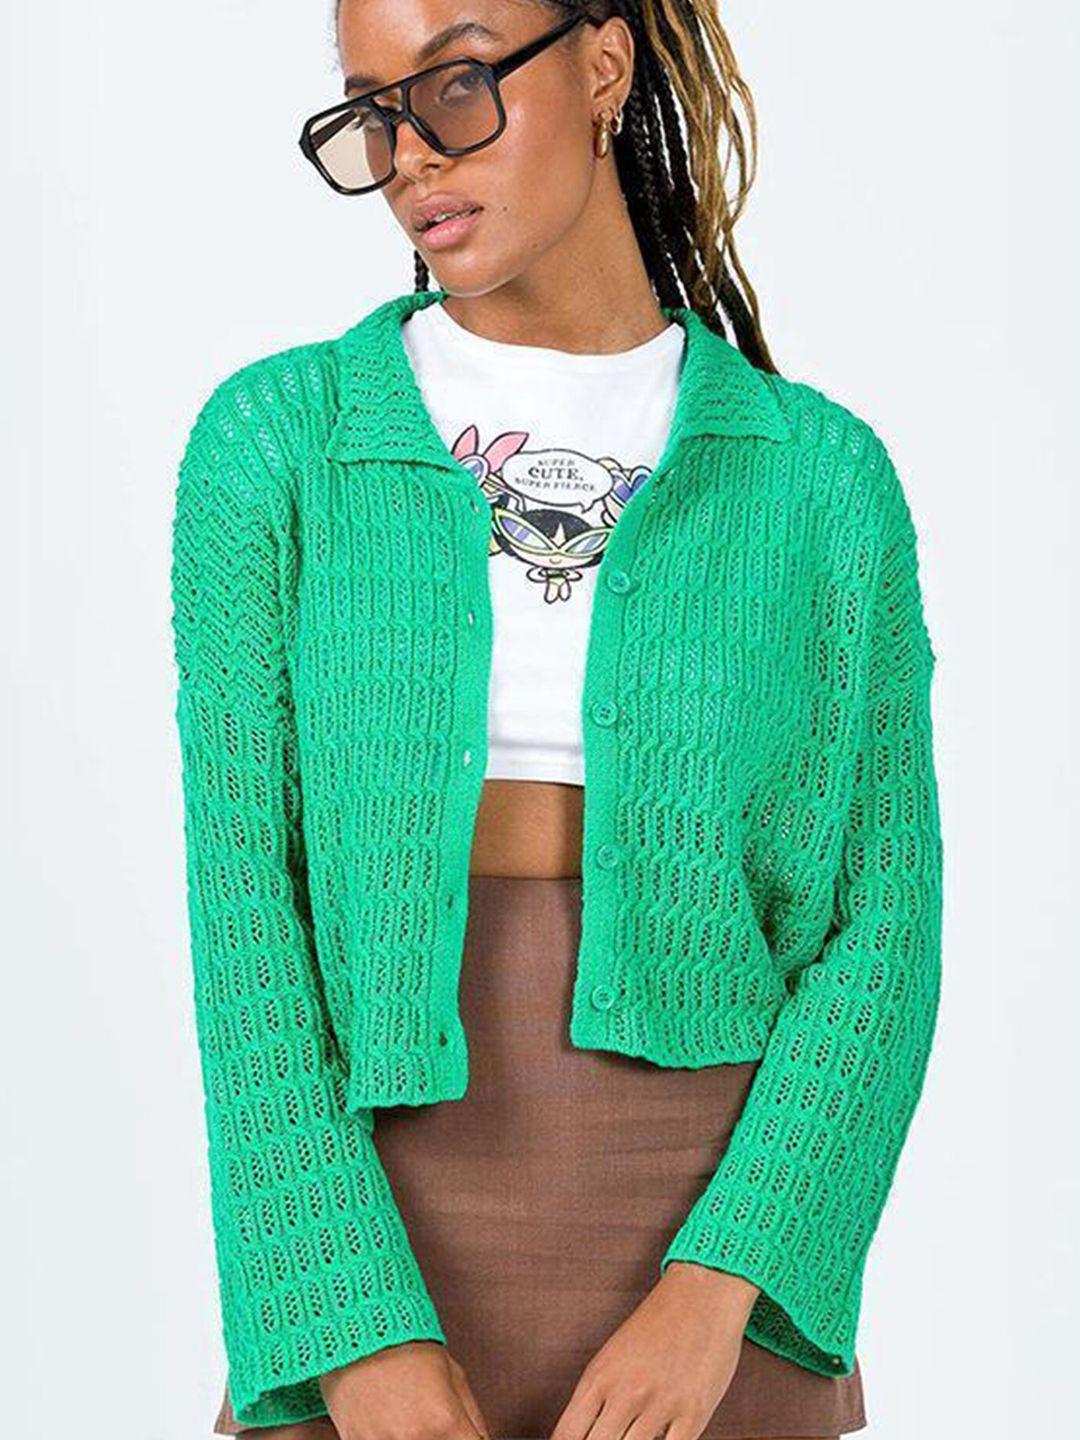 lulu & sky shirt collar crop button down knitted cardigan shrug